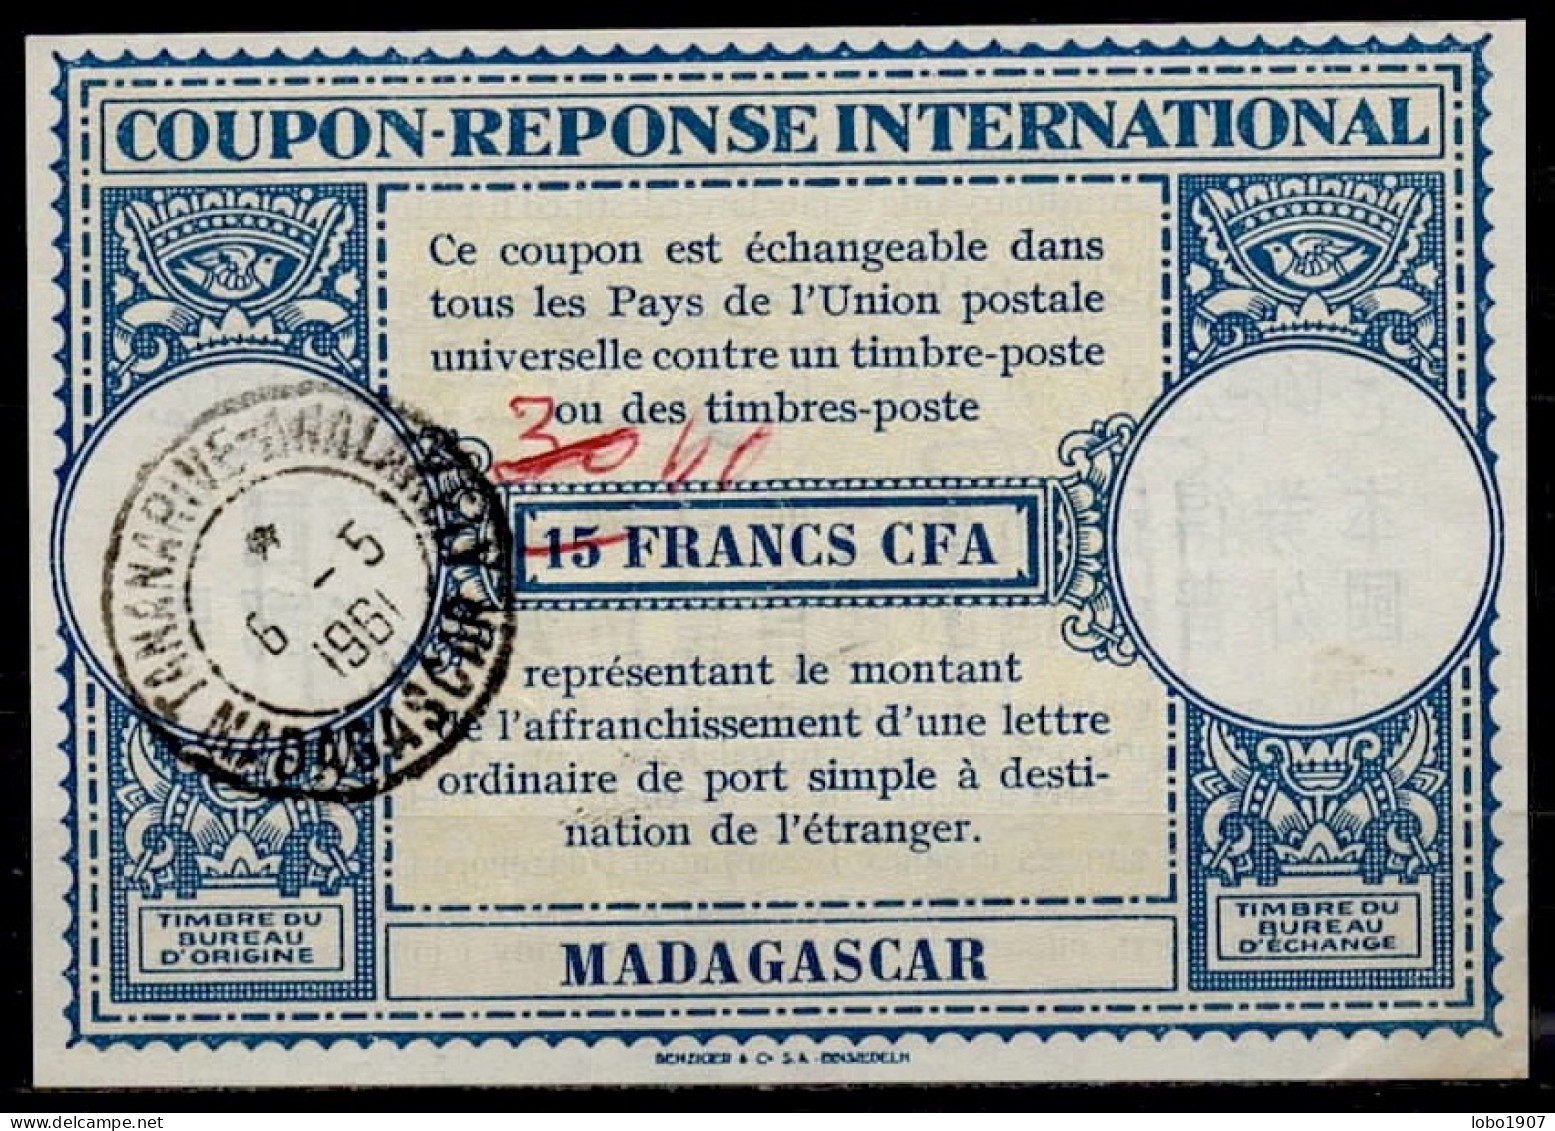 MADAGASCAR  Lo15  40 / 30 / 15 FRANCS CFA Int. Reply Coupon Reponse Antwortschein IRC IAS TANANARIVE ANALAKELY 06.05.61 - Cartas & Documentos